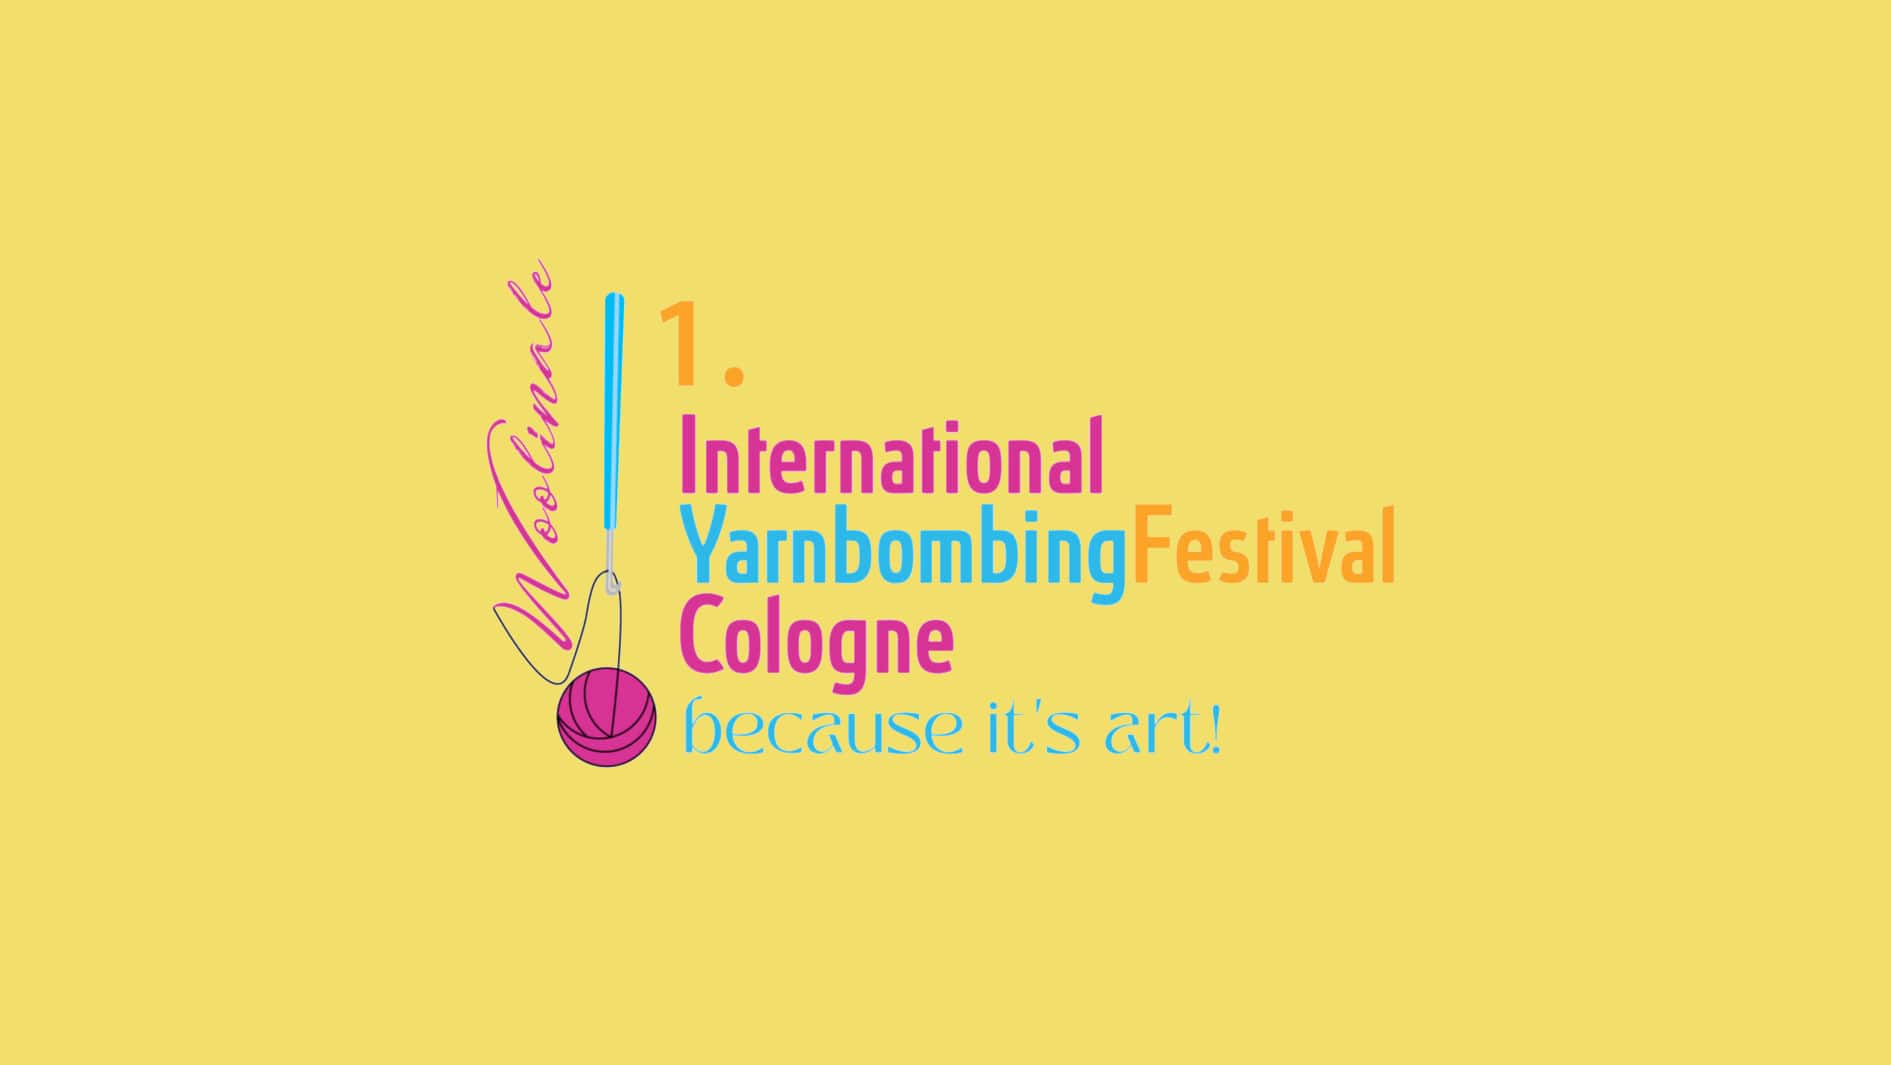 Gassenmaschen Elke Hahn Yarnbombing Festival Logo addi influencer Yarnbombing,crochet art,Gassenmaschen,Yarnbombing Festival